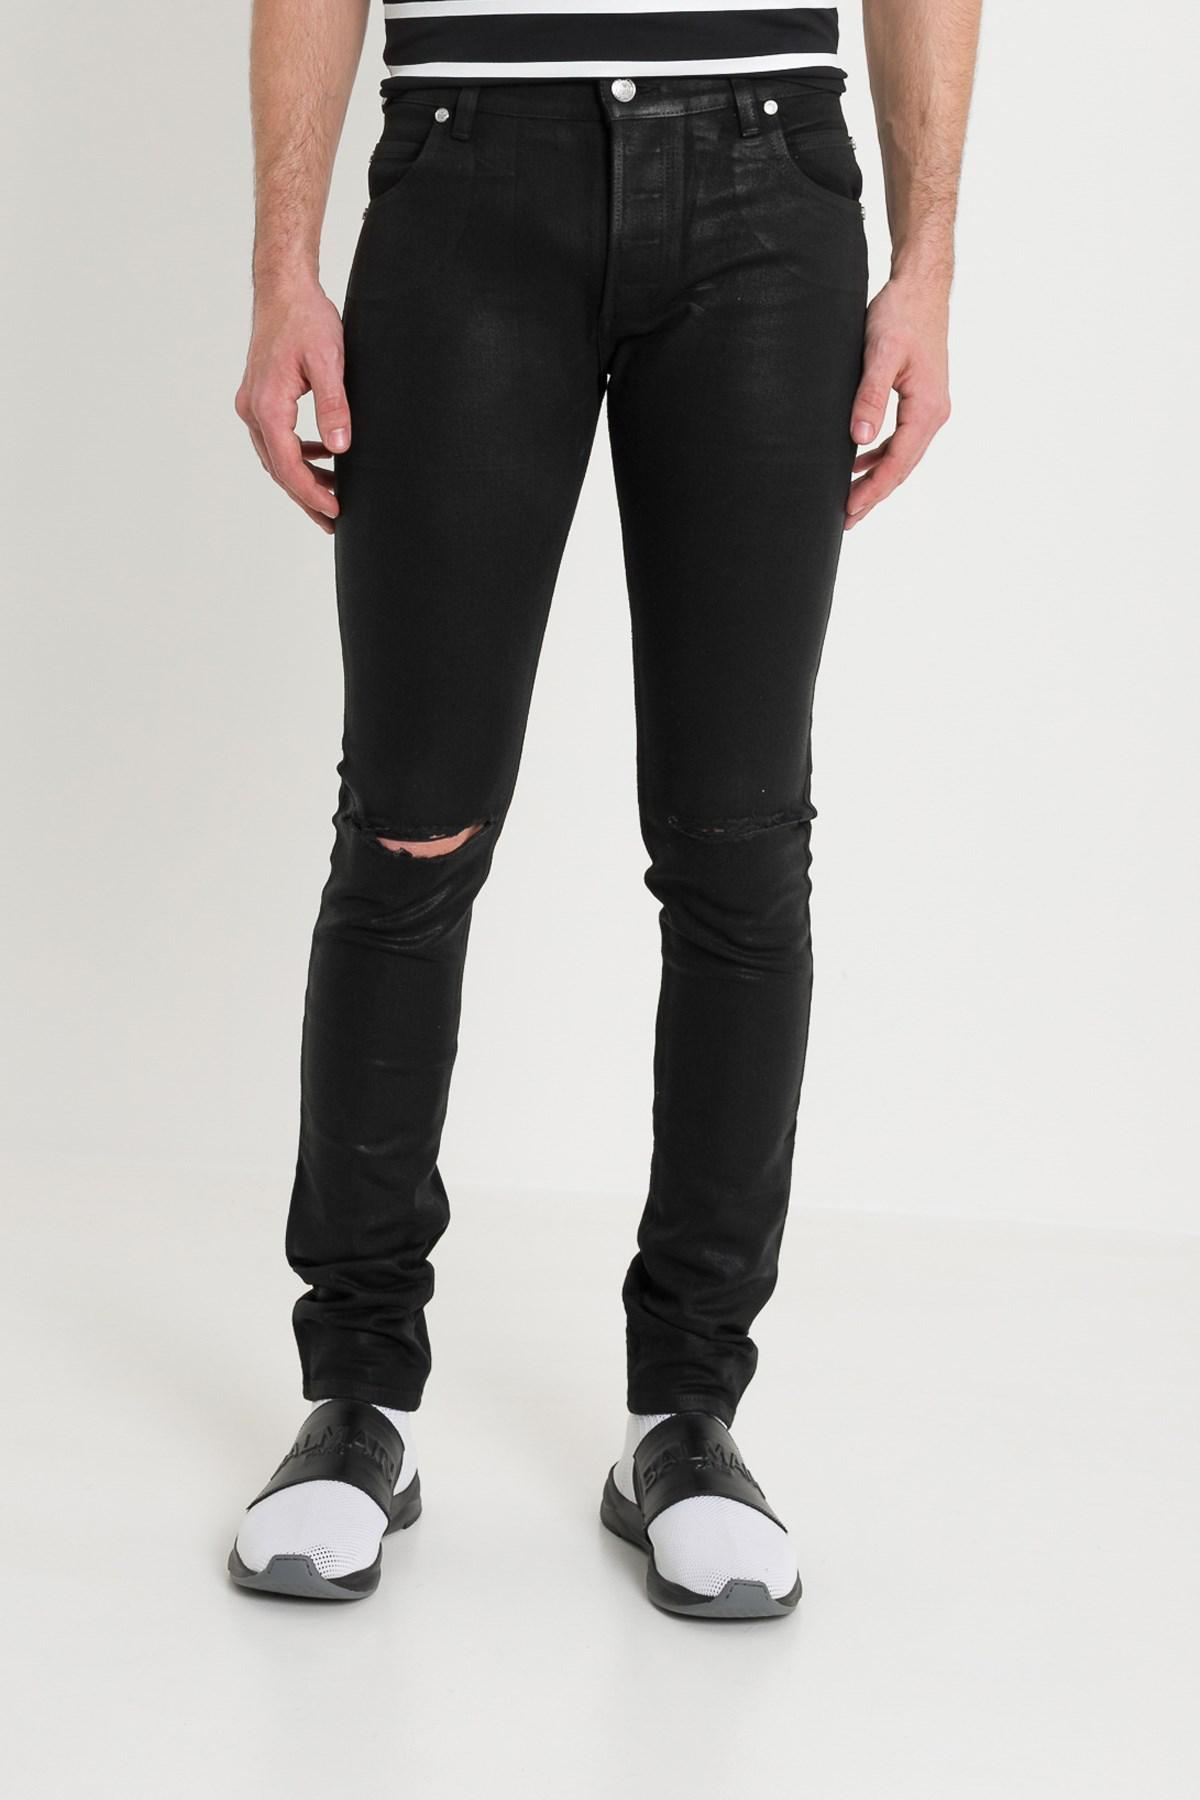 Lyst - Balmain Slim-fit Iridescent Jeans in Black for Men